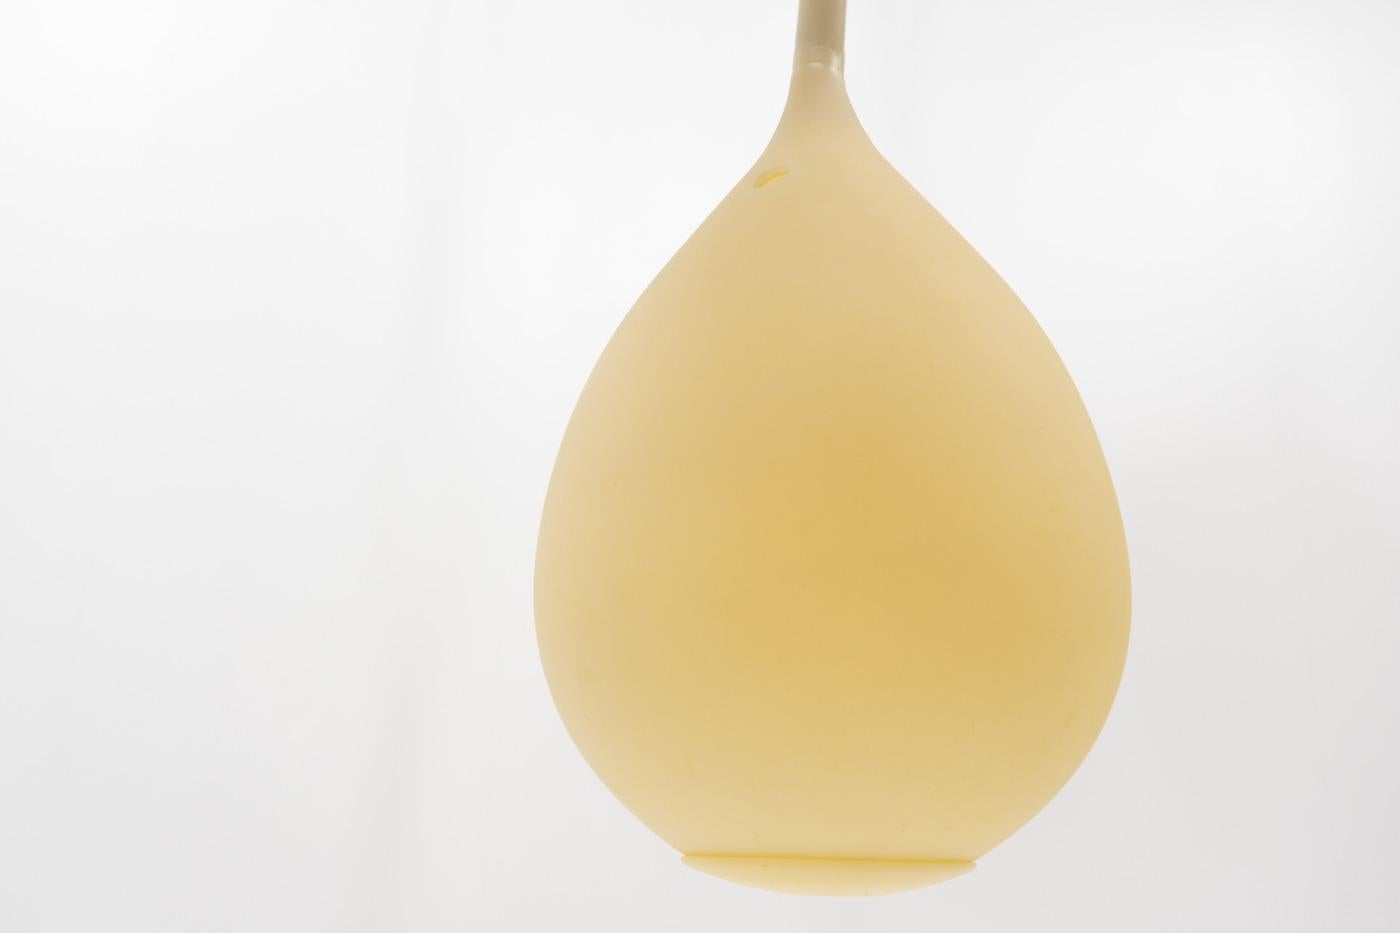 Rare Swiss Design Jingzi Ceiling Lamps, Herzog & De Meuron, for Belux, 2000s For Sale 3